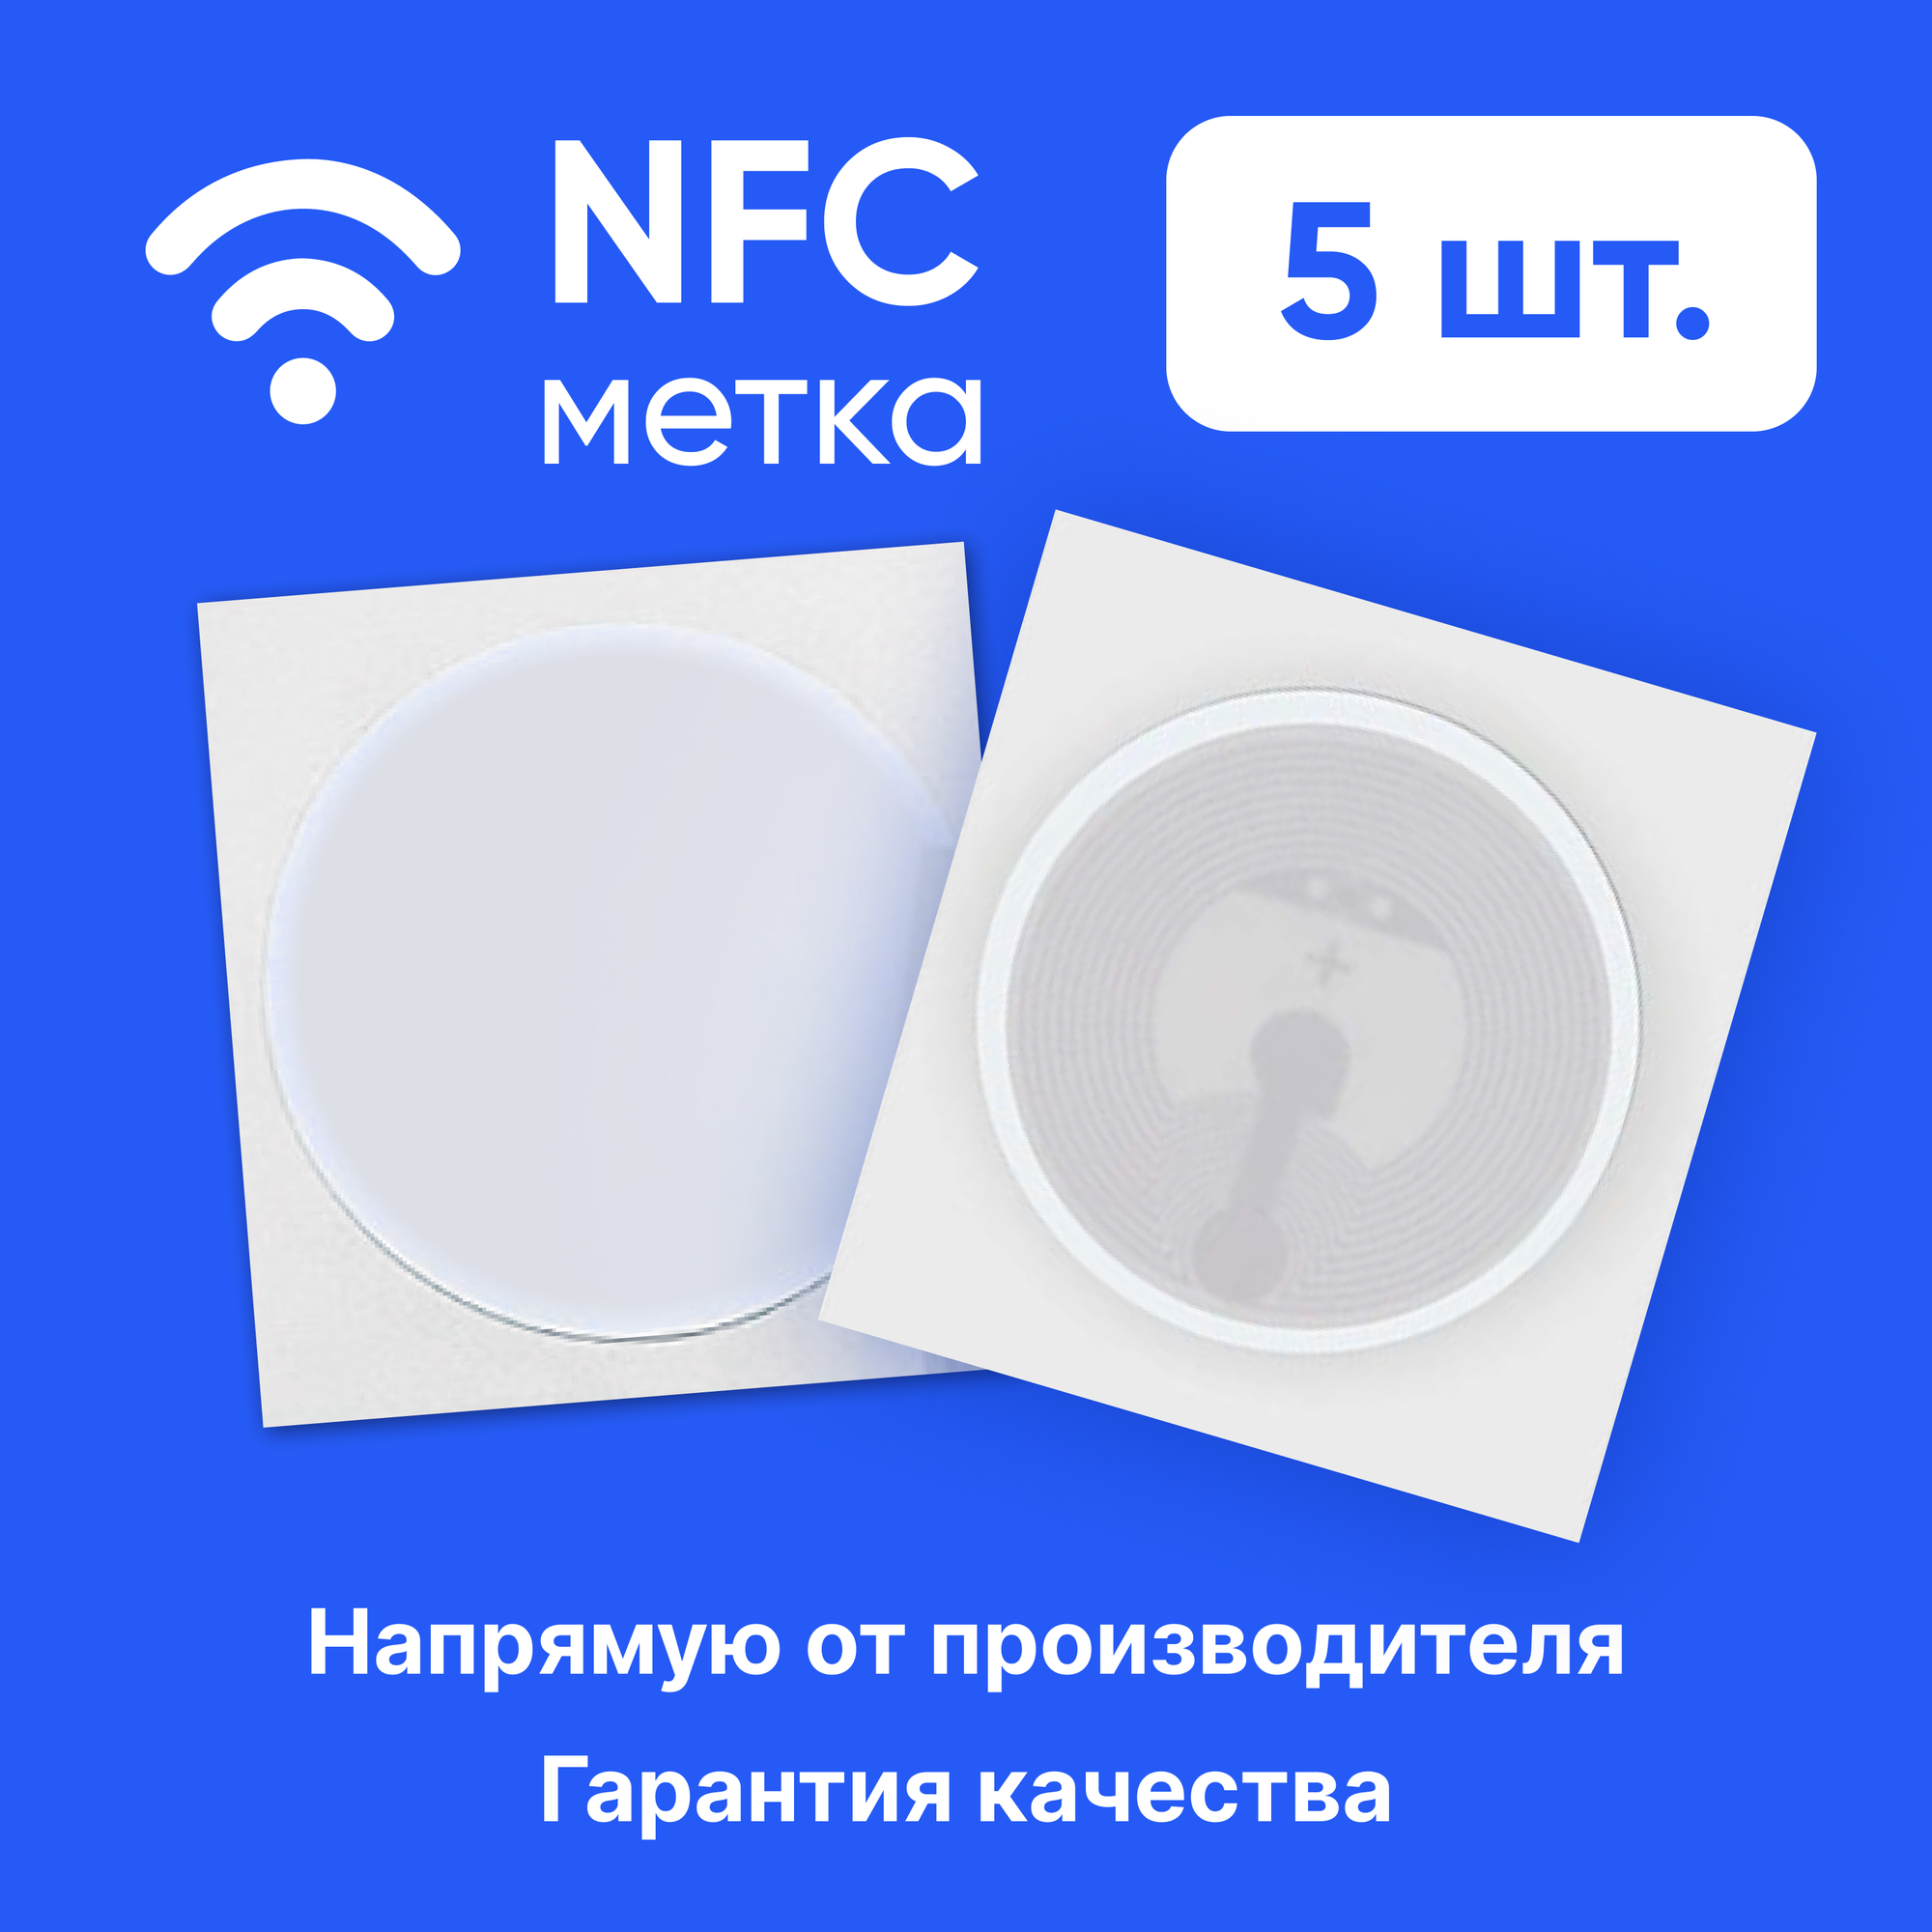 NFC метки